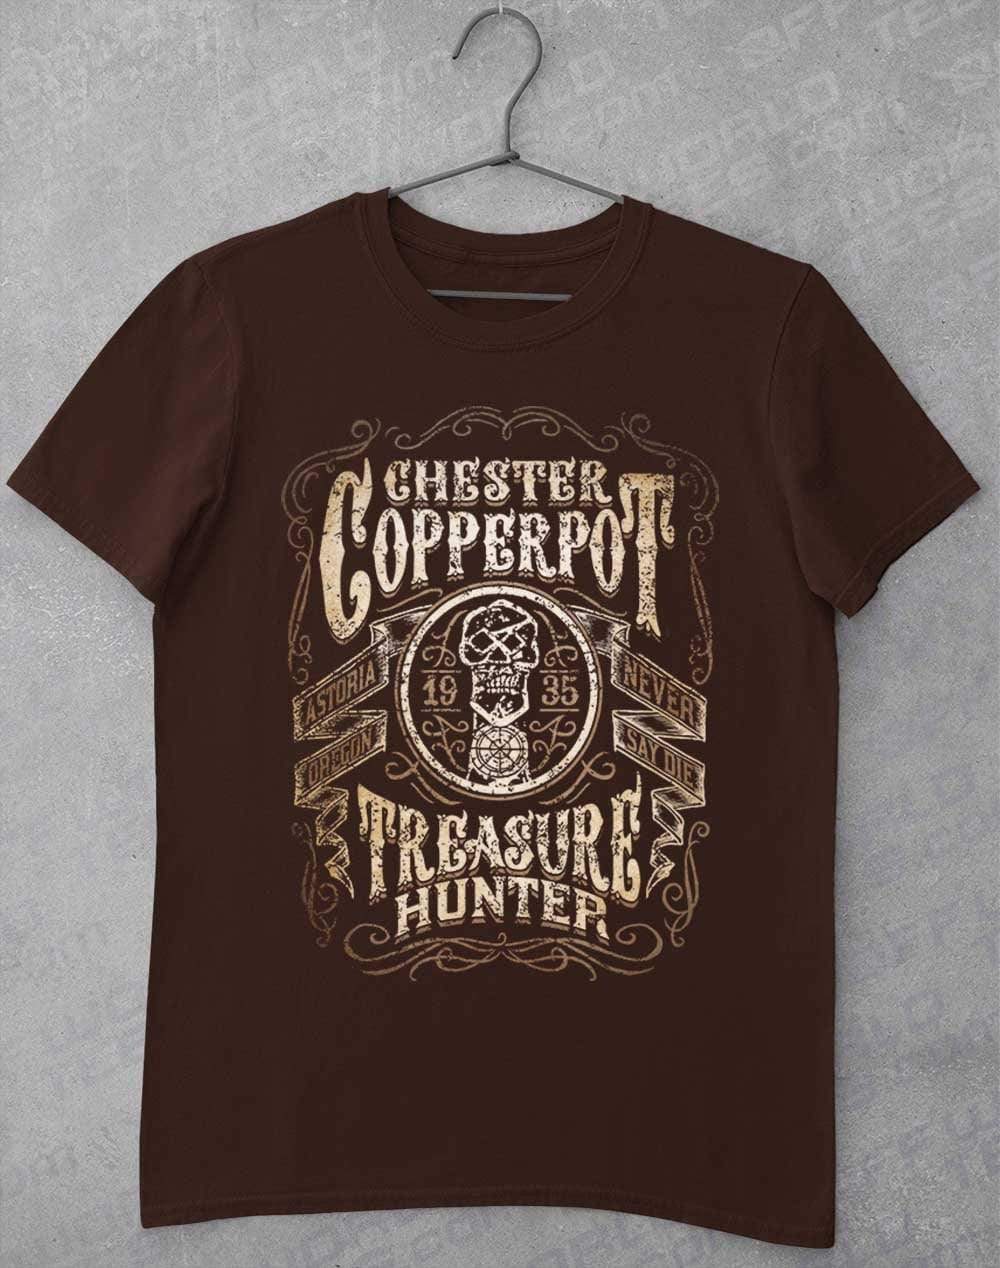 Chester Copperpot Treasure Hunter T-Shirt S / Dark Chocolate  - Off World Tees